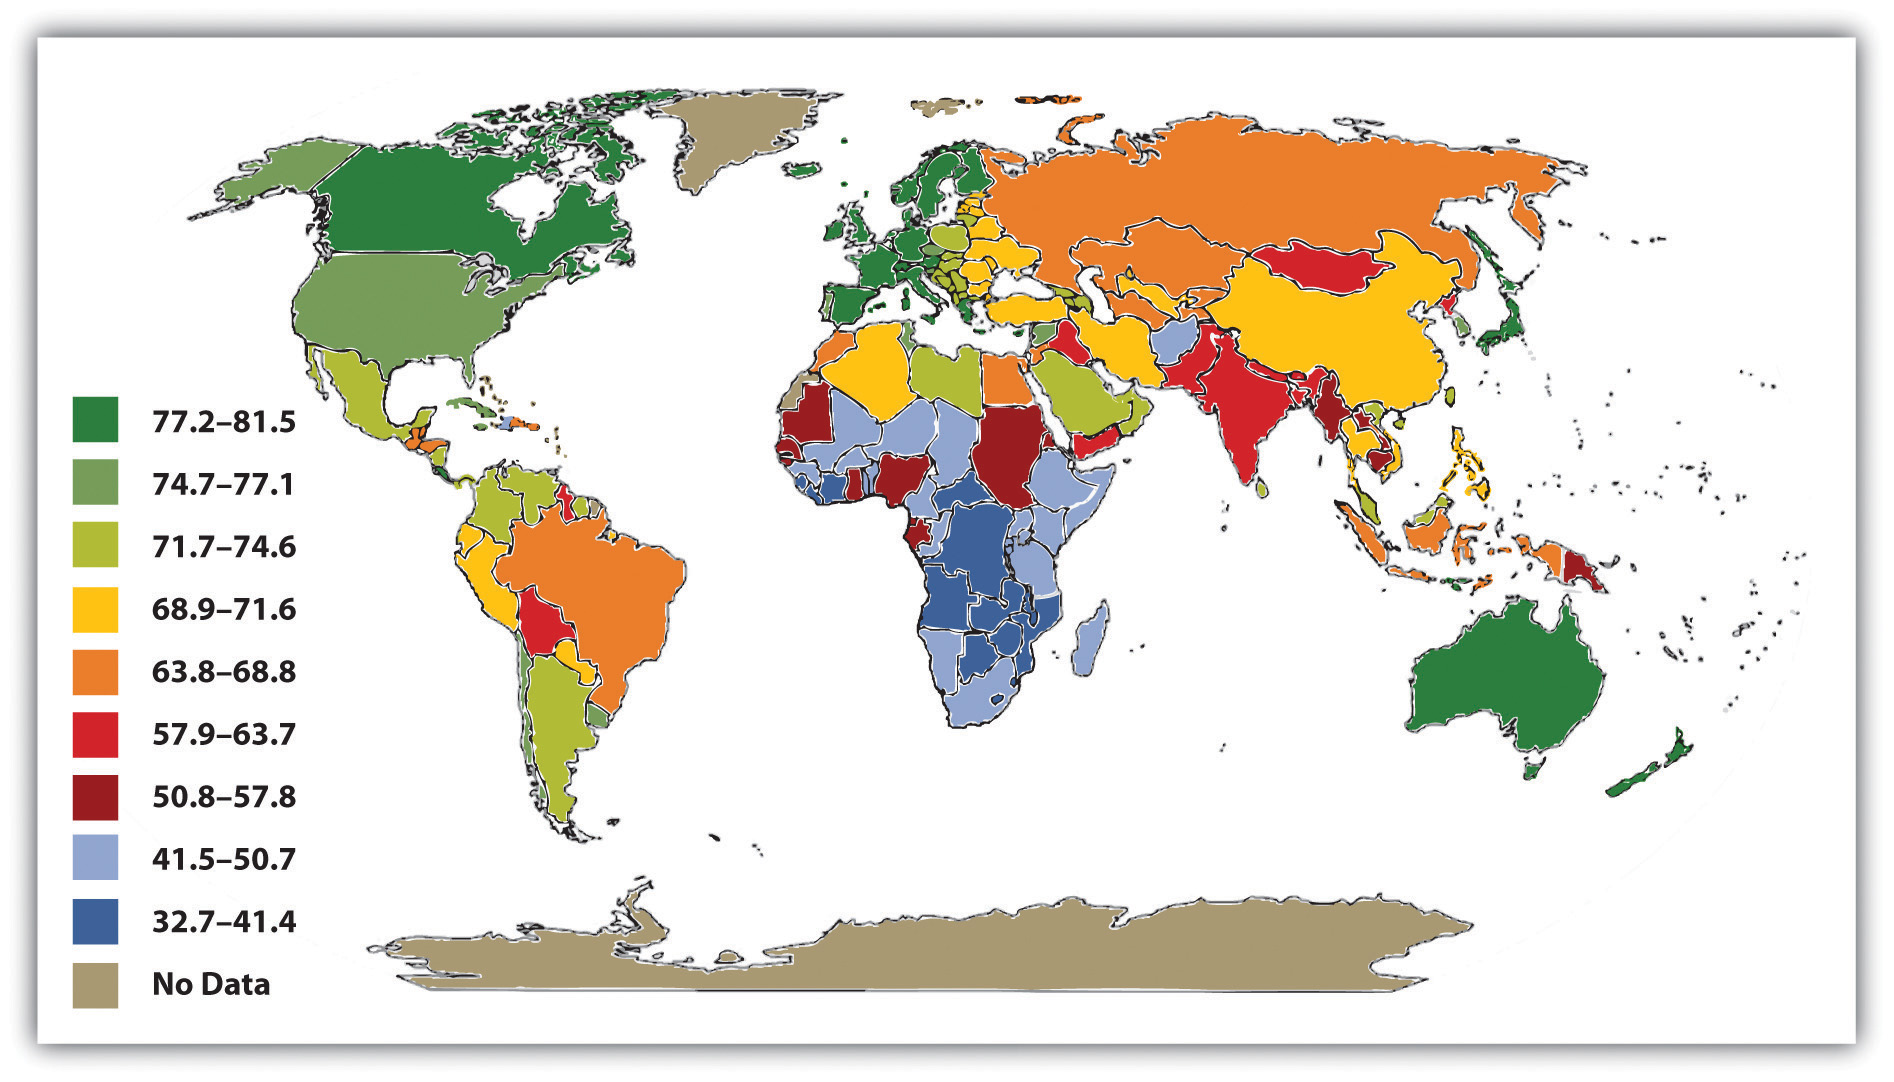 Average Life Expectancy Across the Globe (Years)